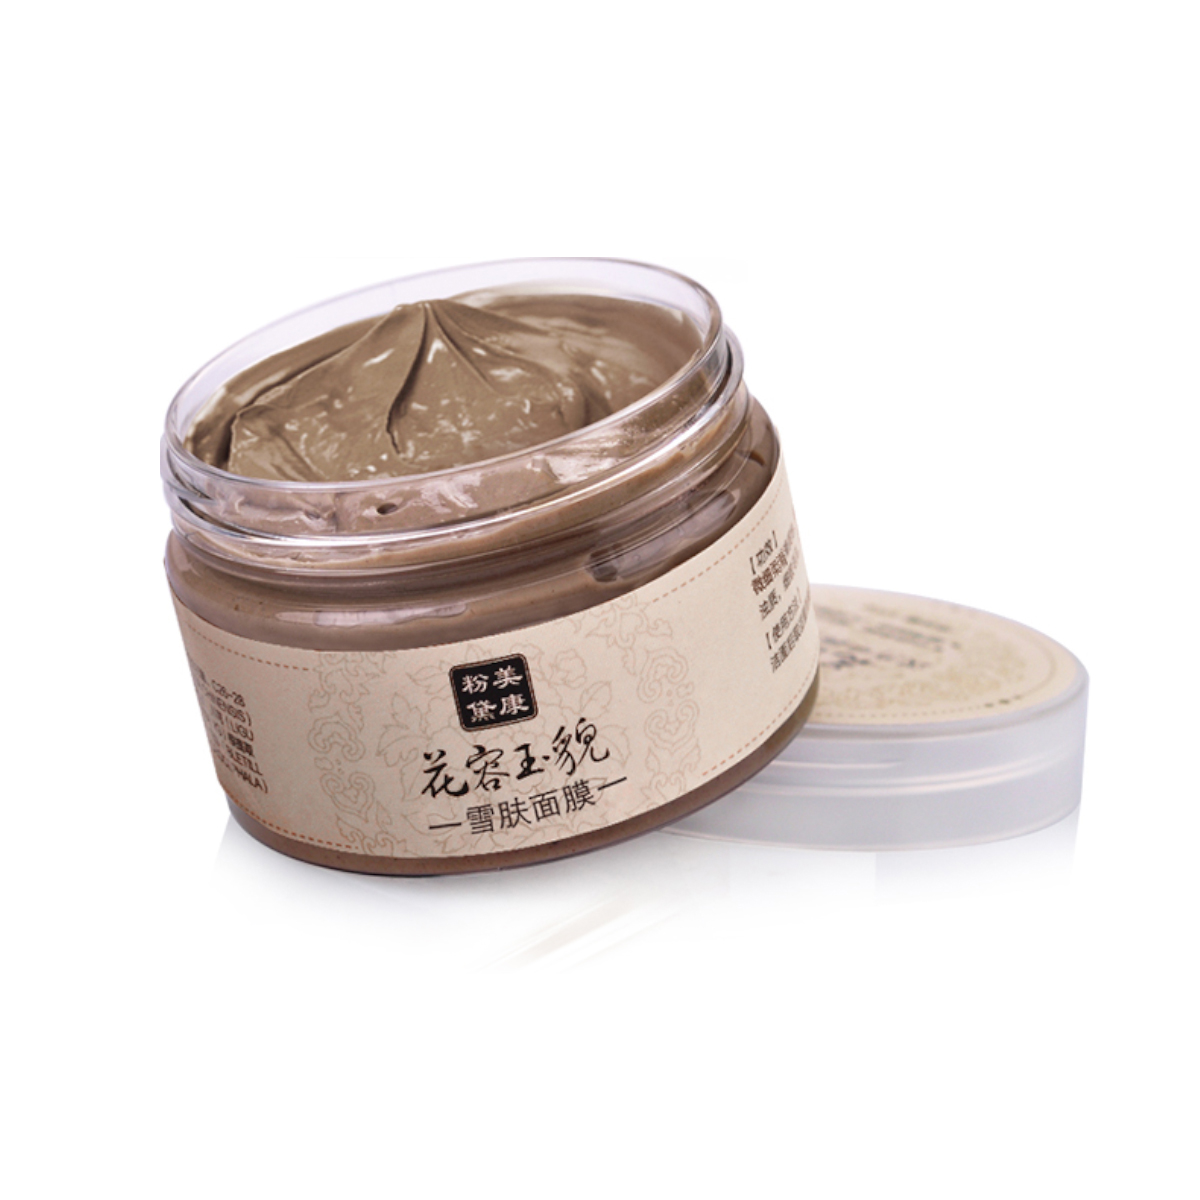 MEIKING Skin Care Herb Acne Scar Blackhead Mite Treatment Whitening Face Mask Cream 120g